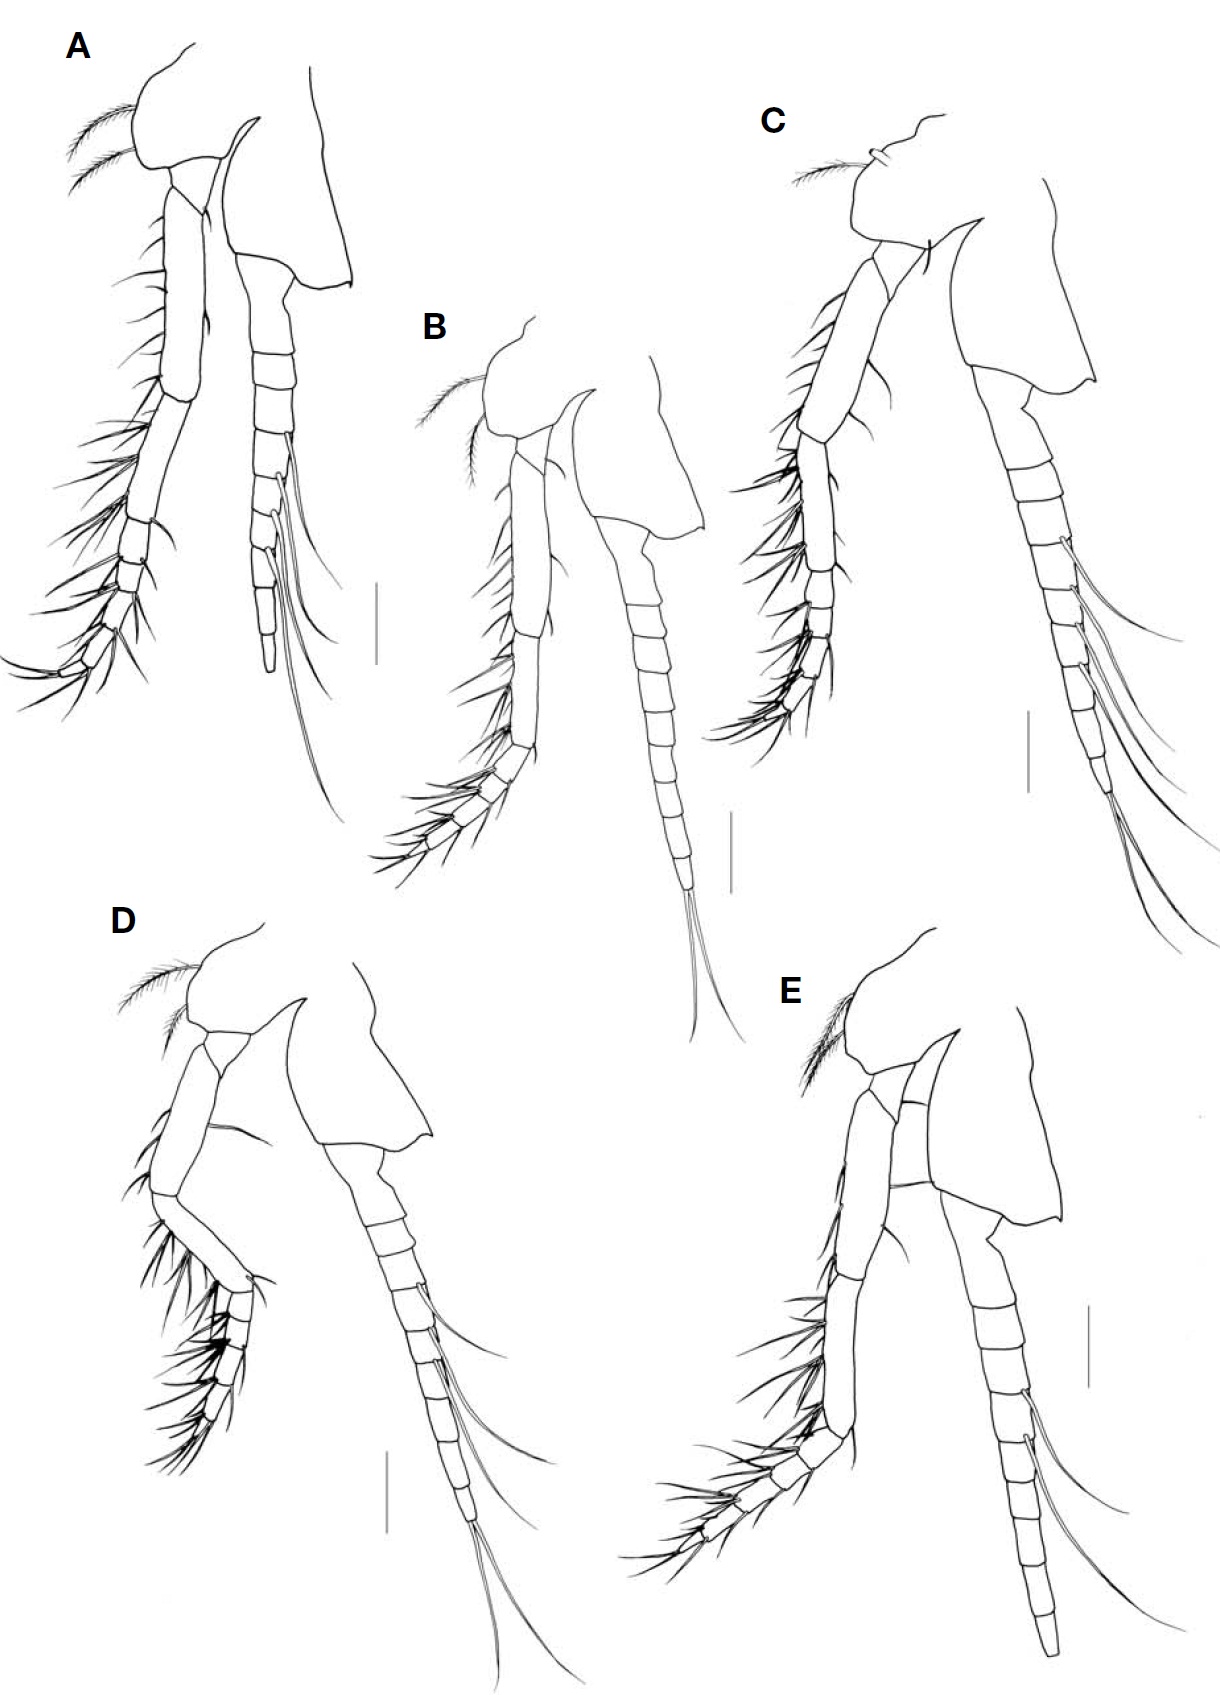 Exacanthomysis japonica Murano 1991 female. A Third thoracopod; B Fourth thoracopod; C Fifth thoracopod; D Sixththoracopod; E Seventh thoracopod. Scale bars: A-E=0.2 mm.